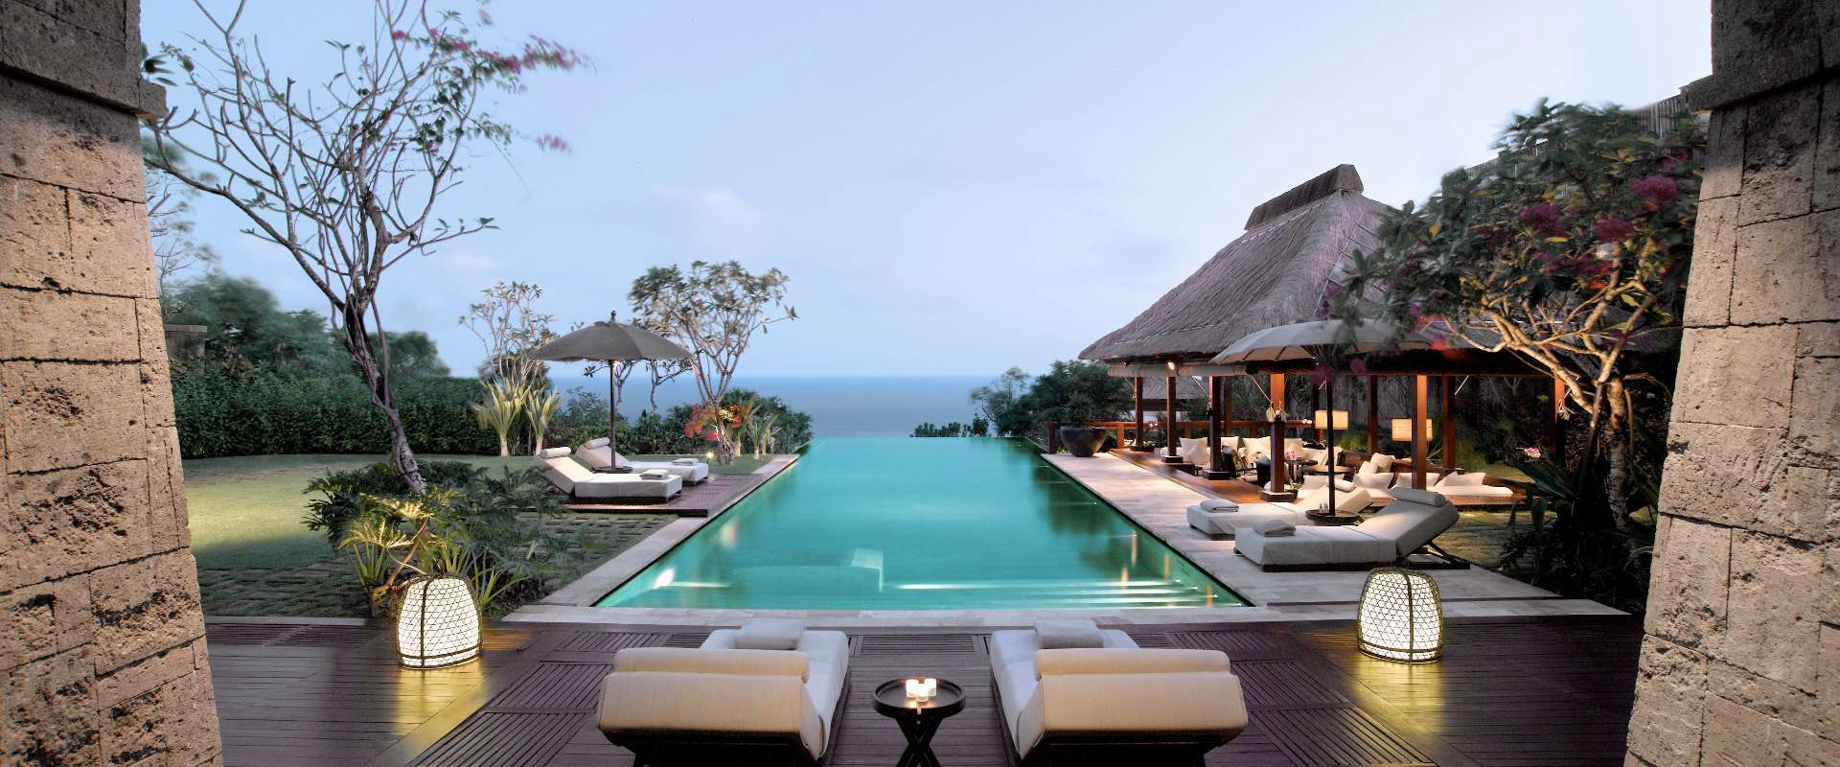 Bvlgari Resort Bali – Uluwatu, Bali, Indonesia – The Bvlgari Villa Pool Deck Ocean View Twilight